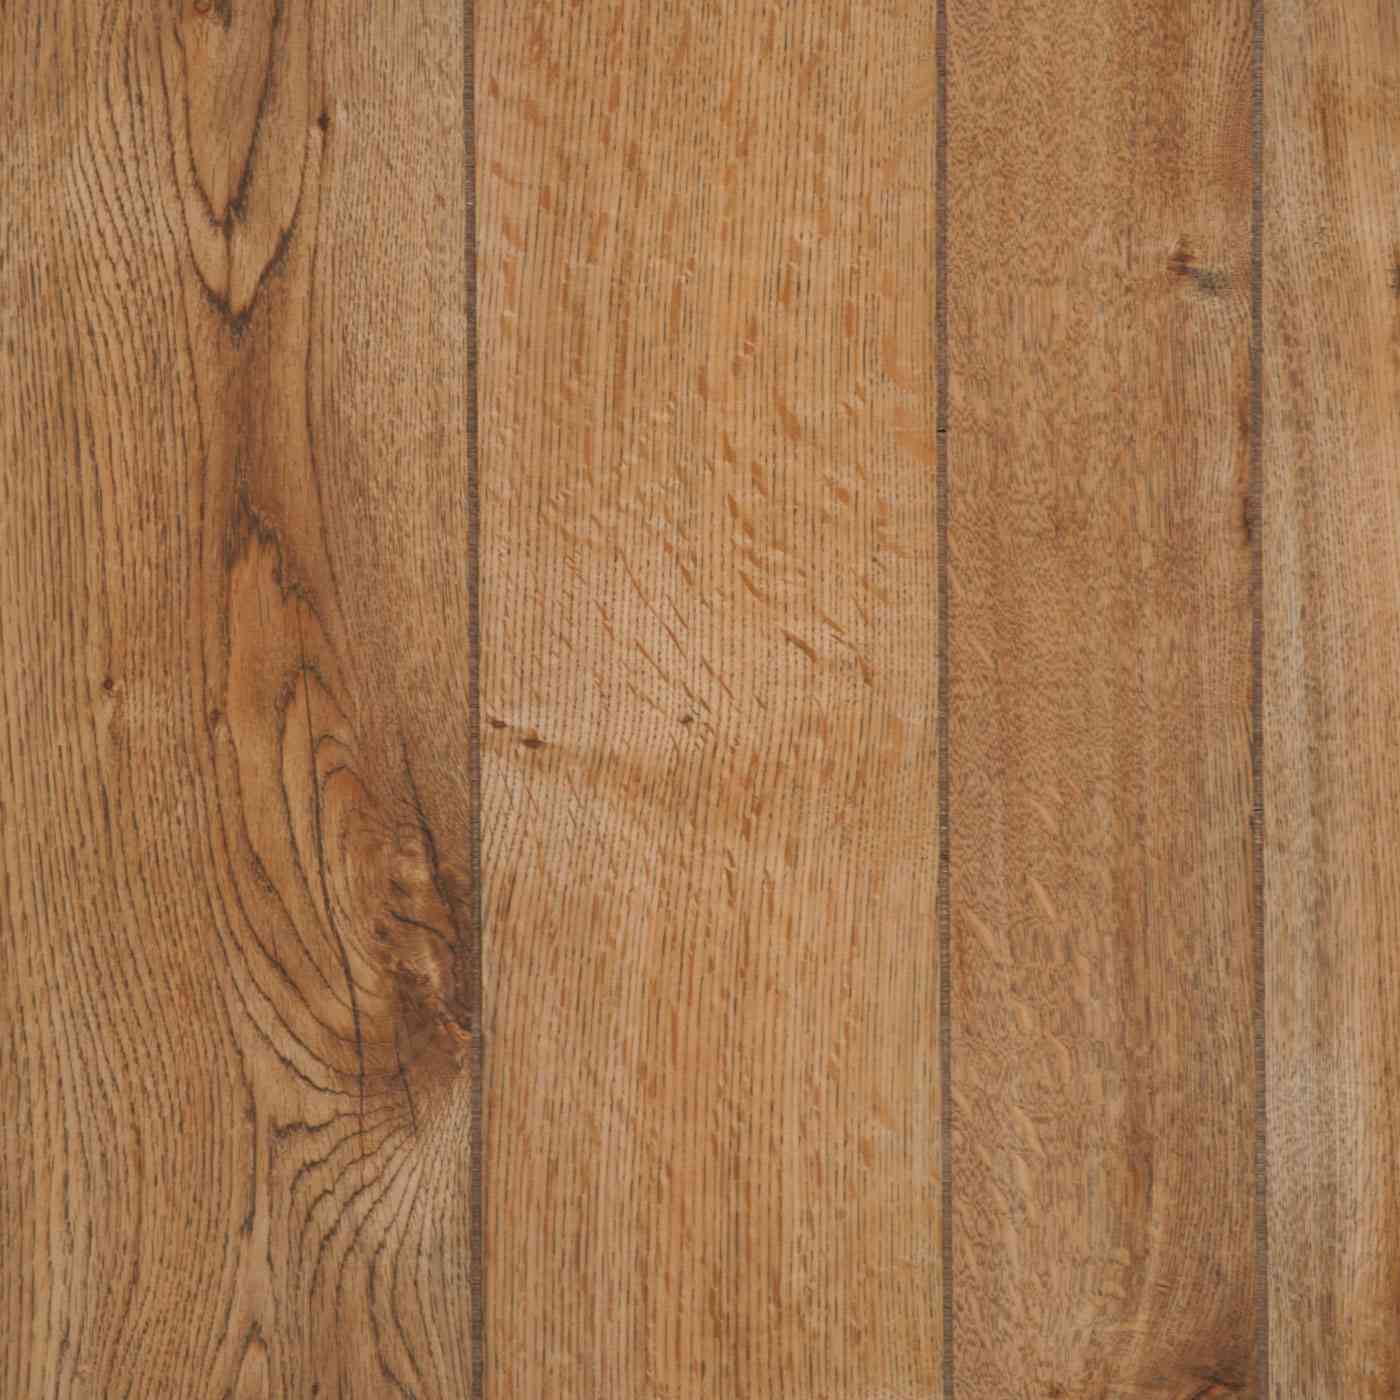 Gallant Oak Random Plank Paneling